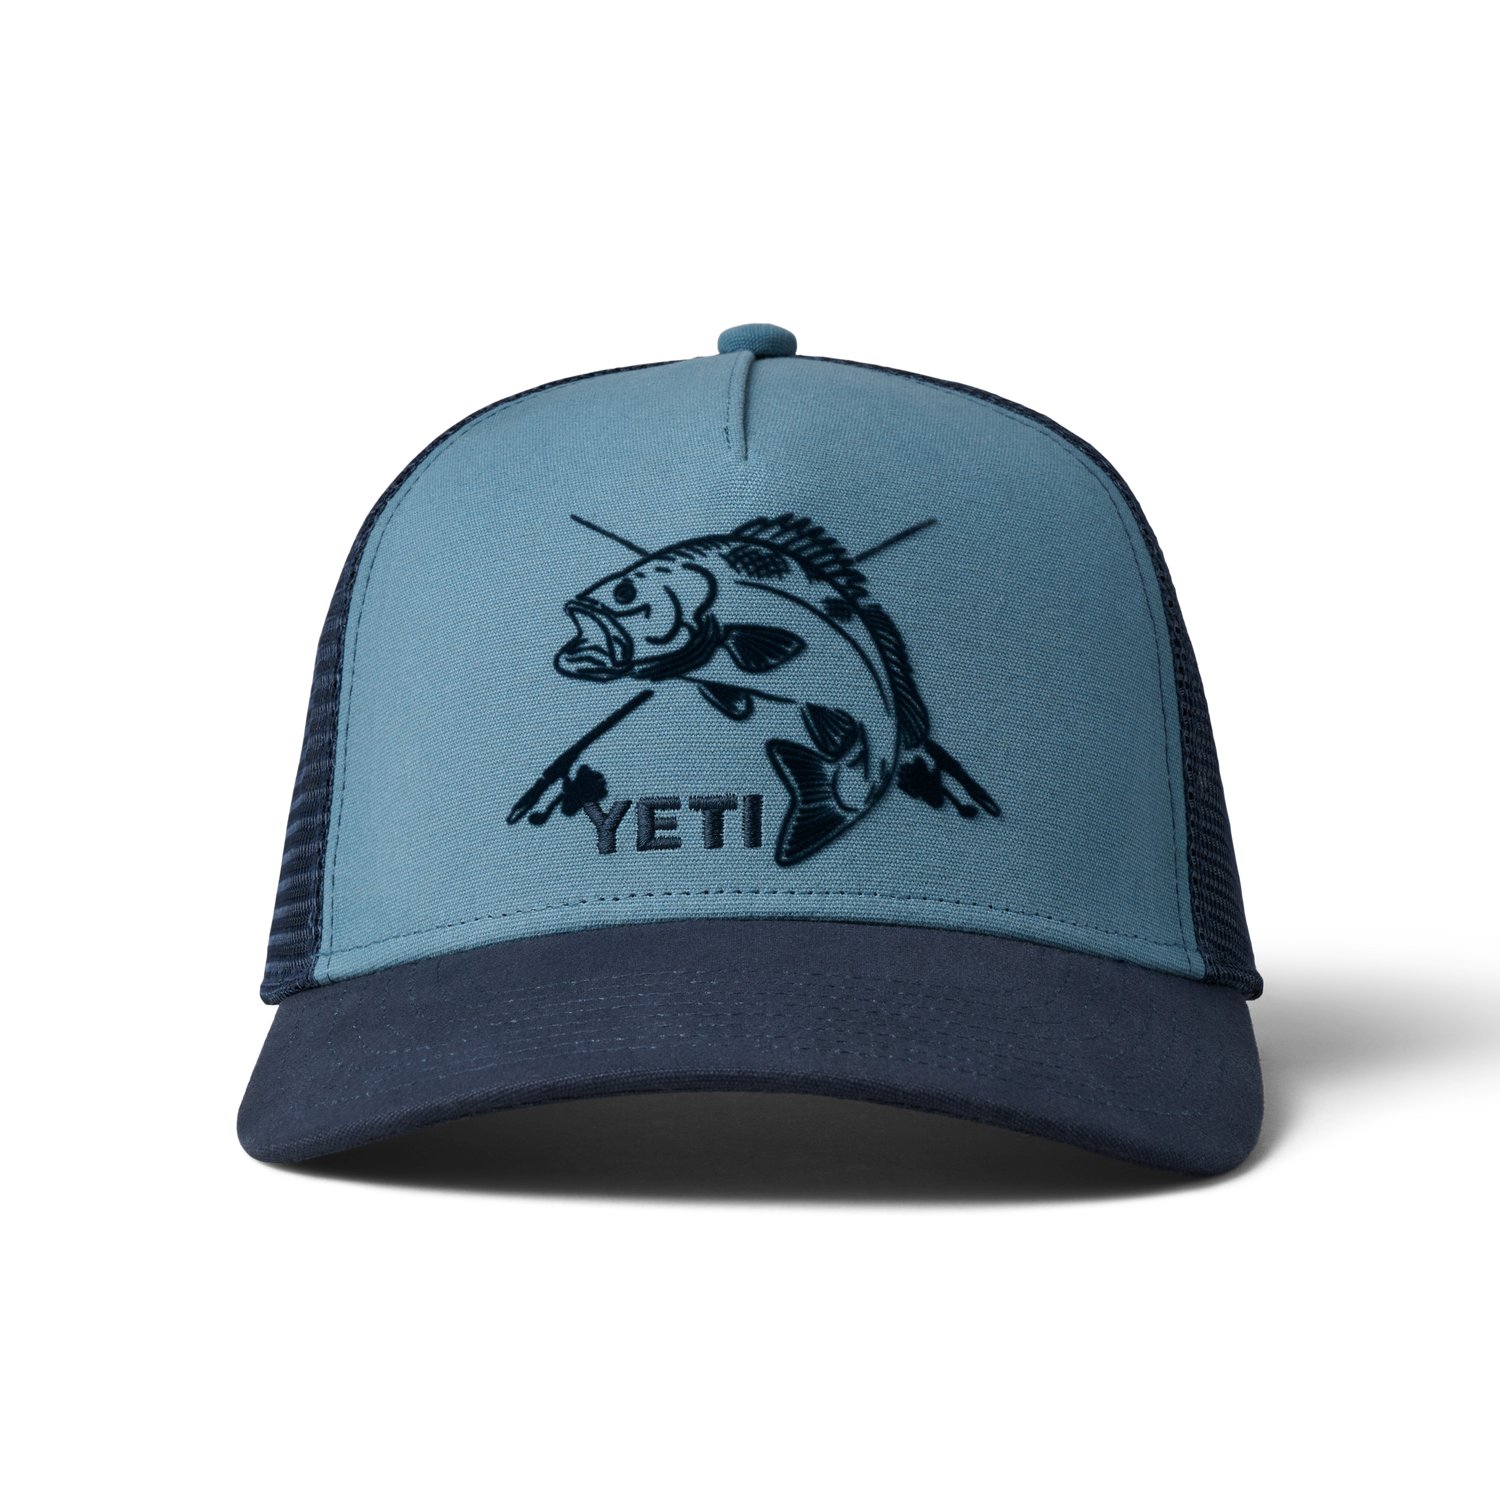 Yeti Fishing Bass Trucker Hat - Deep Blue / Navy